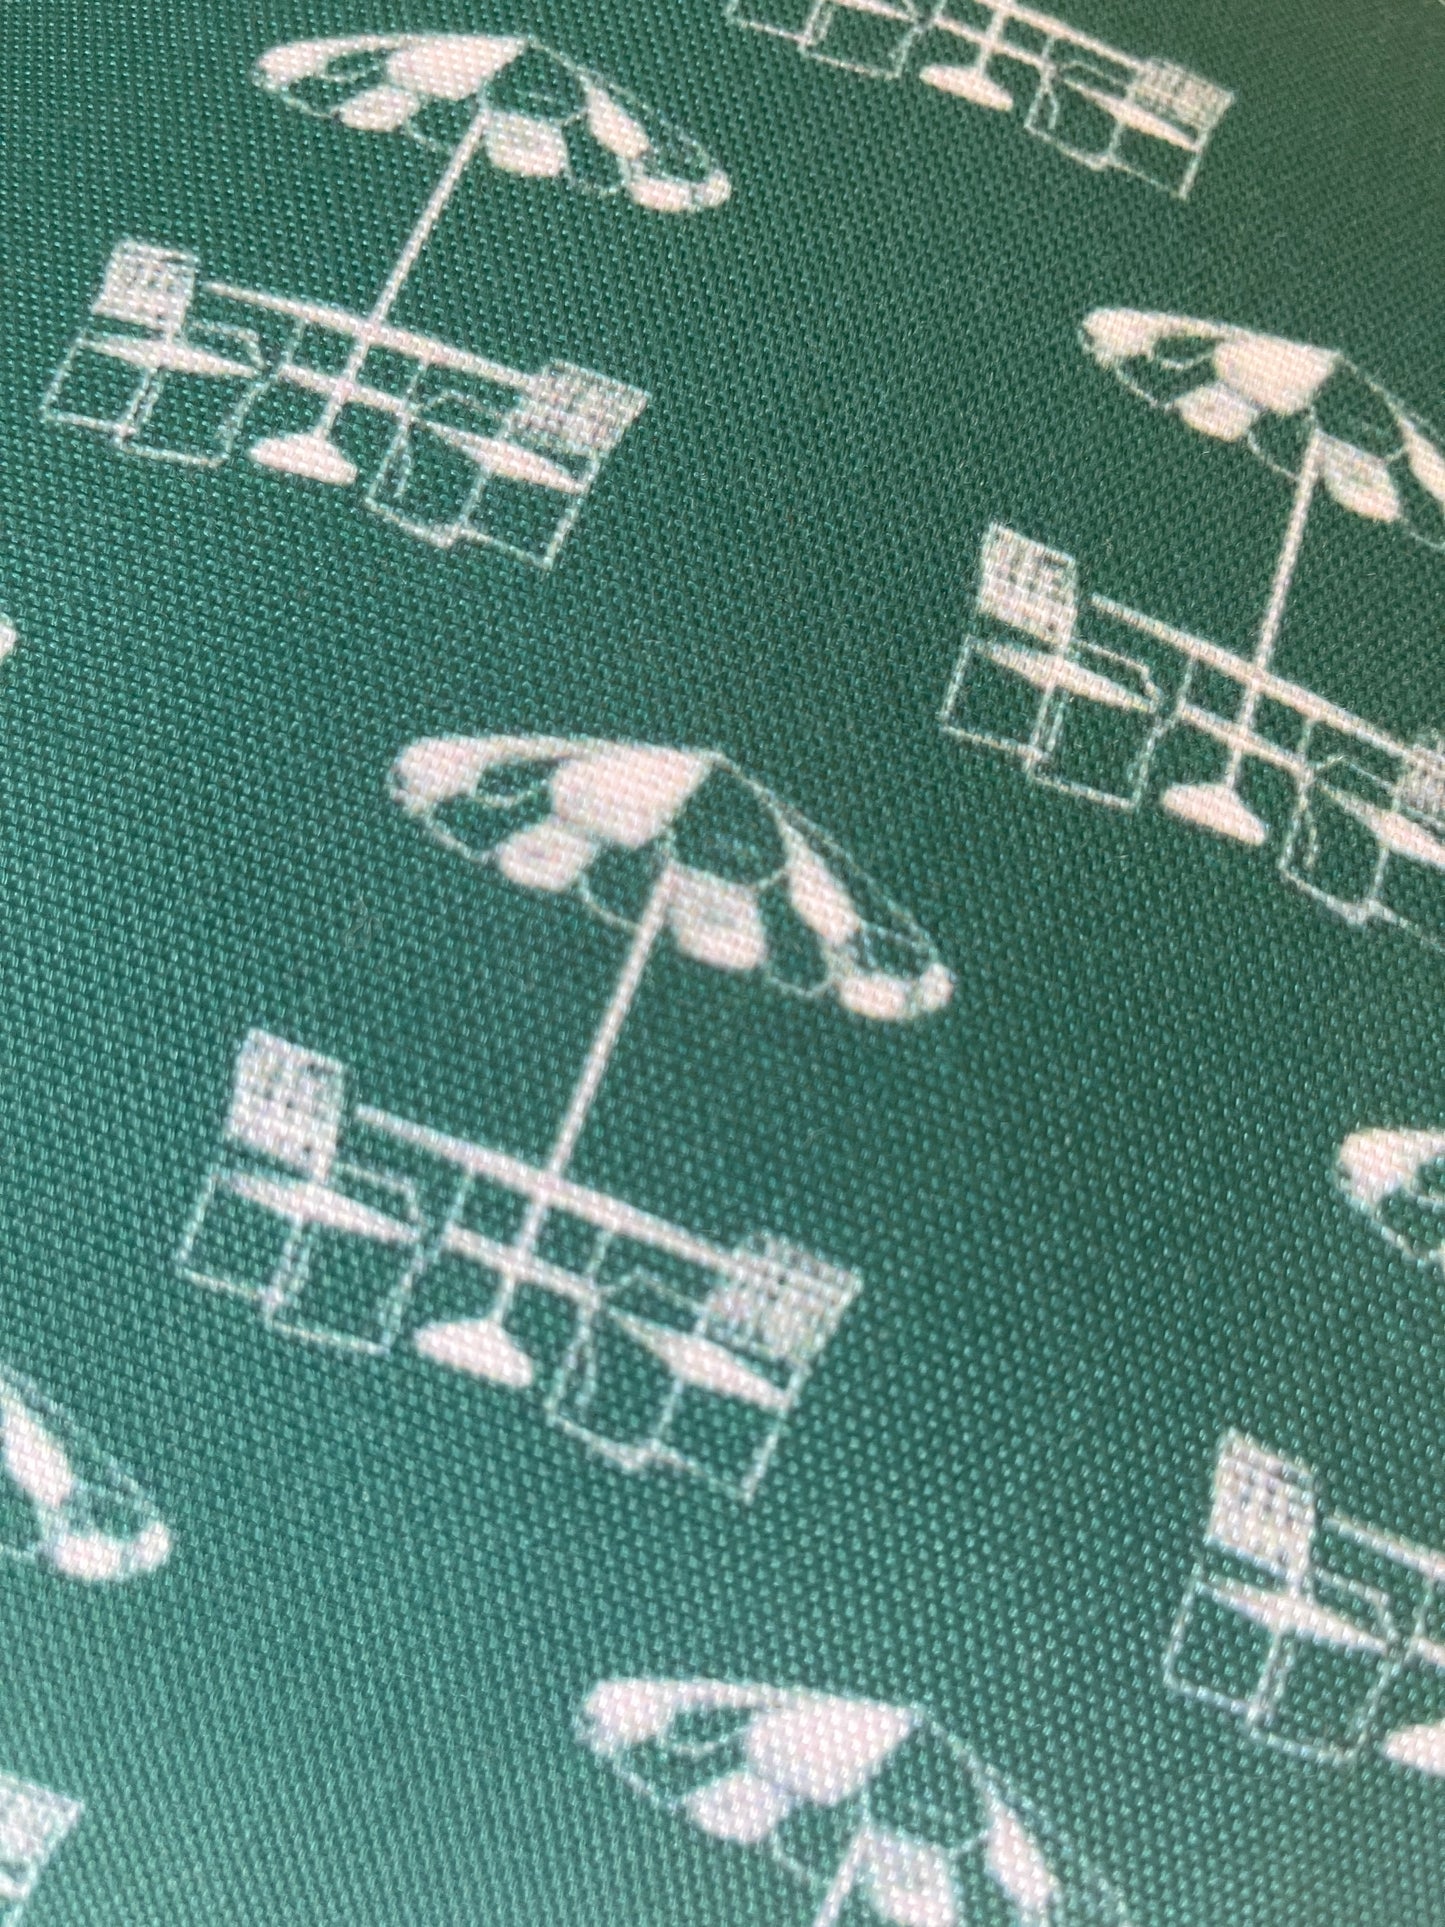 Green and White Umbrellas Fabric